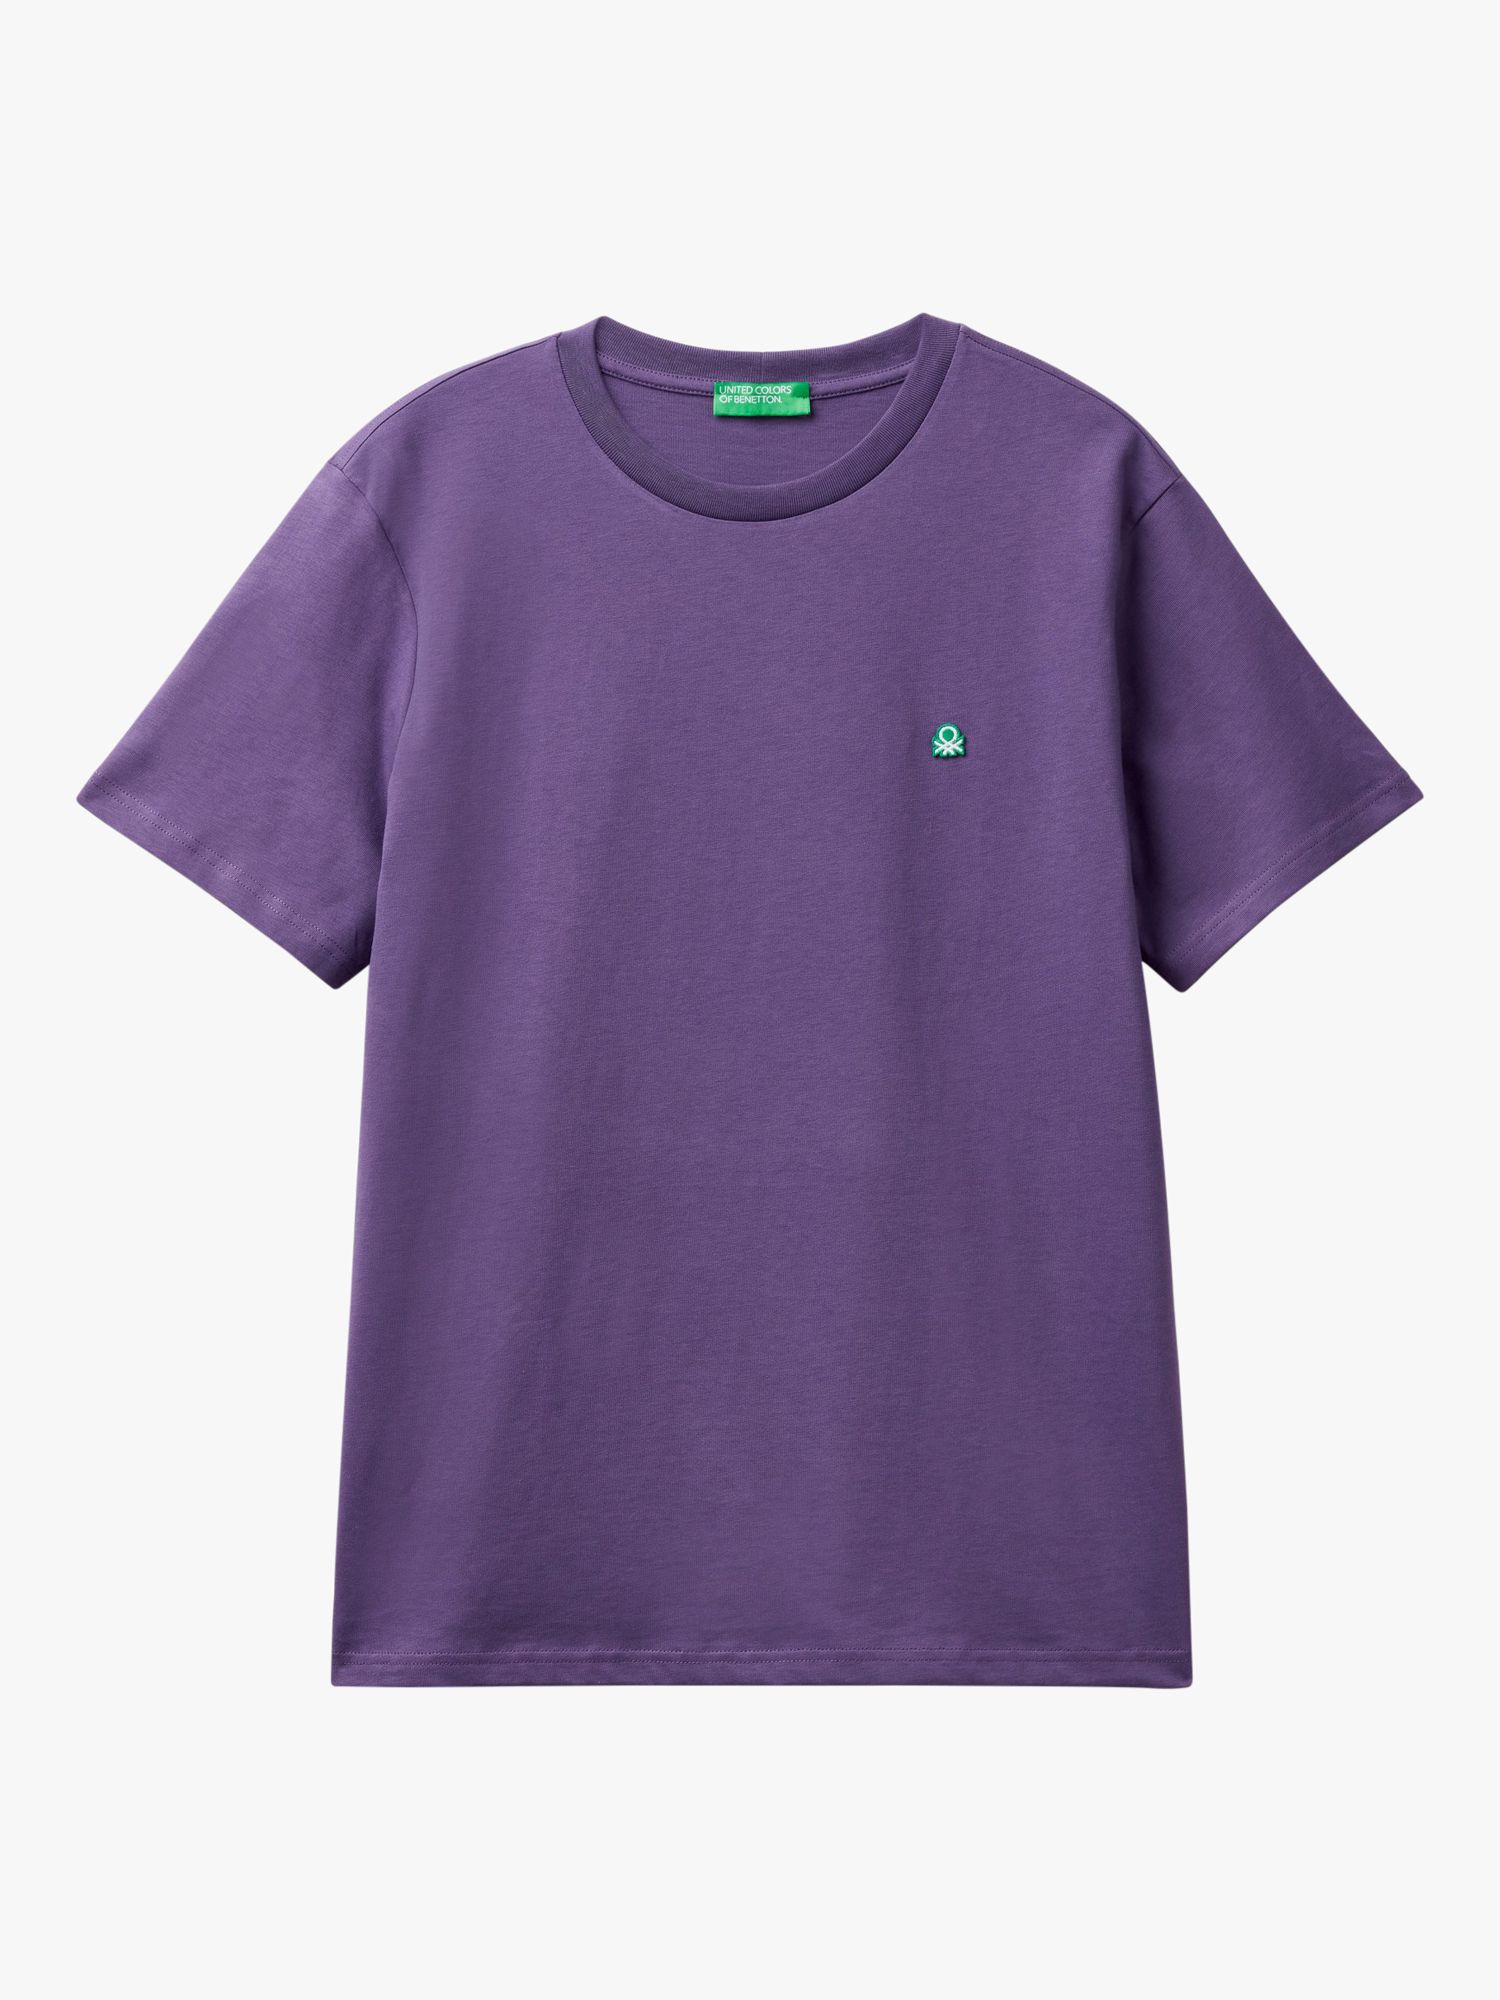 Benetton Short Sleeve T-Shirt, Violet, S